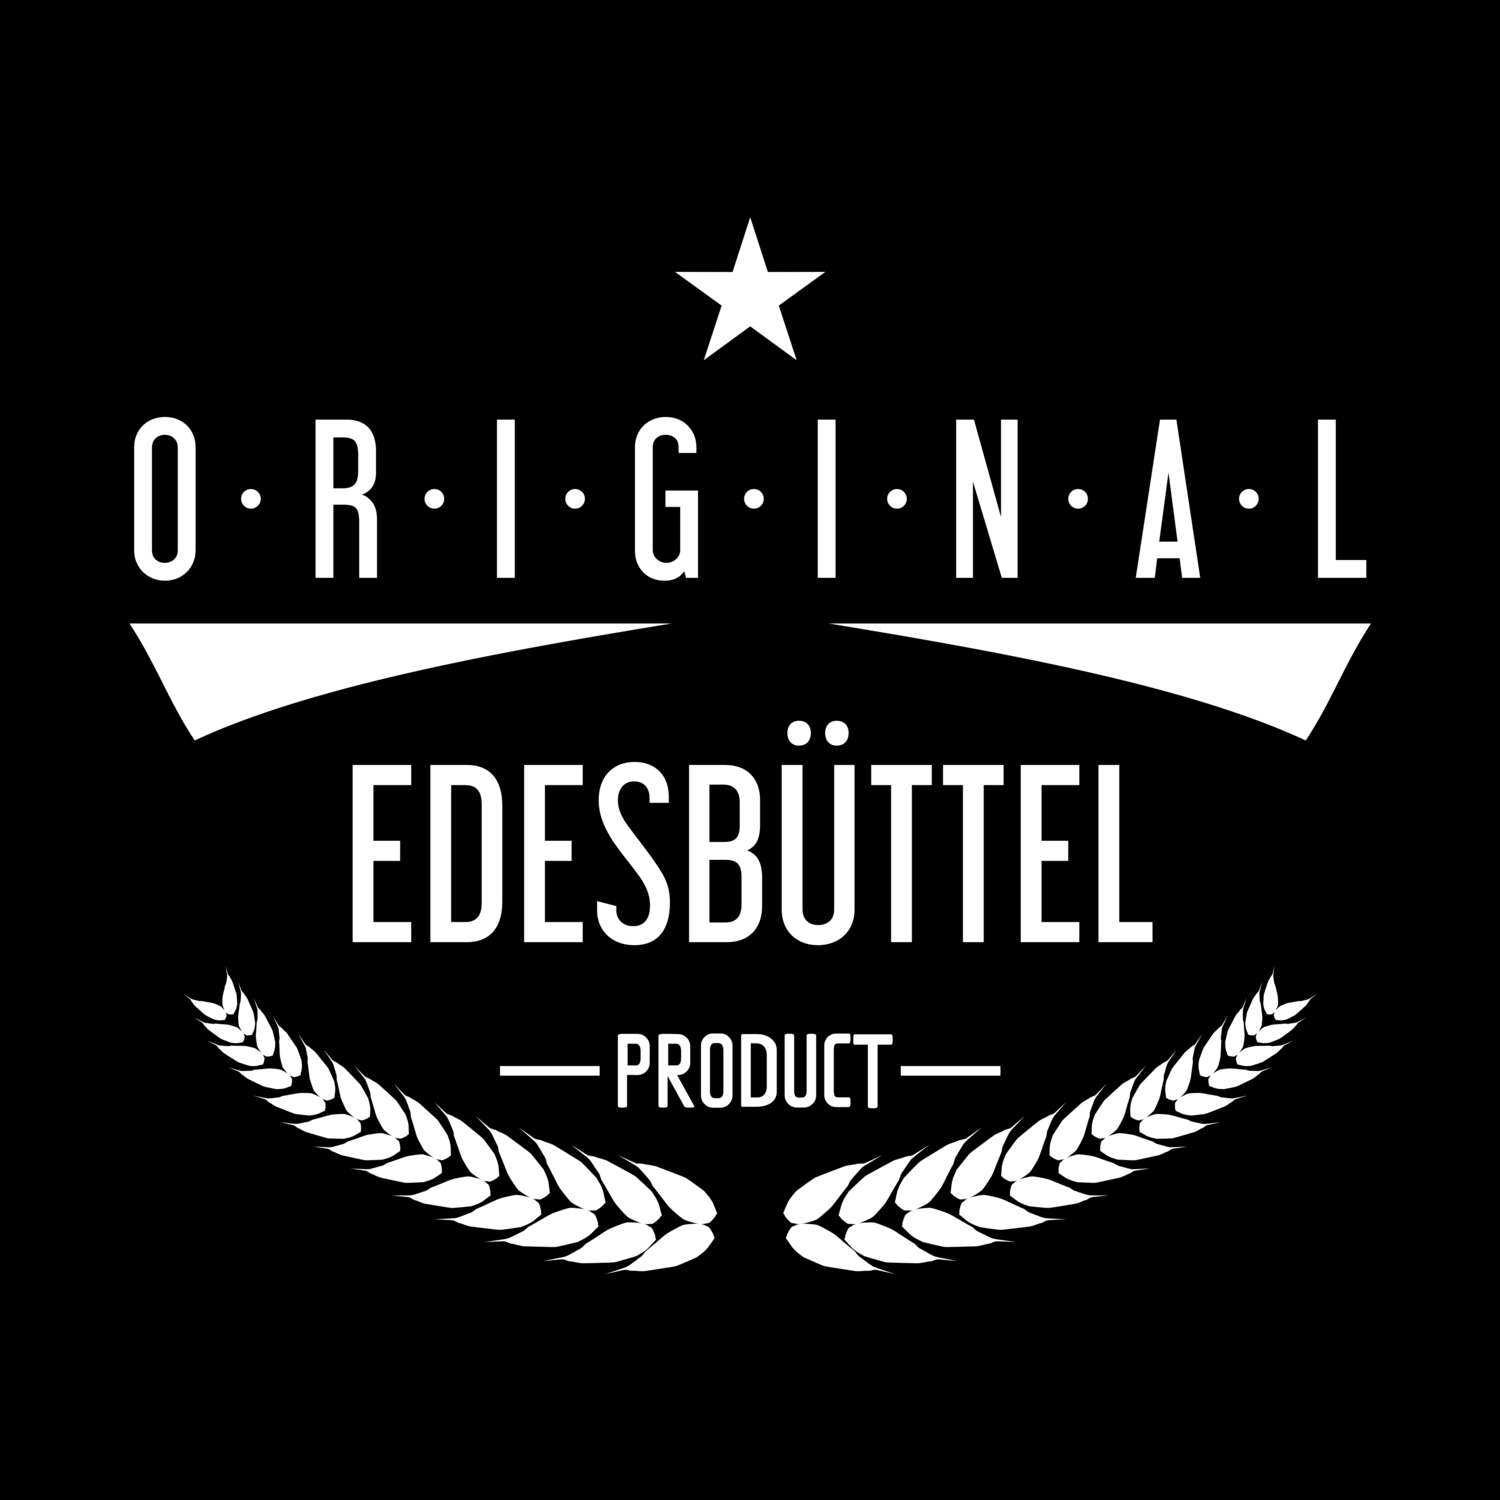 Edesbüttel T-Shirt »Original Product«